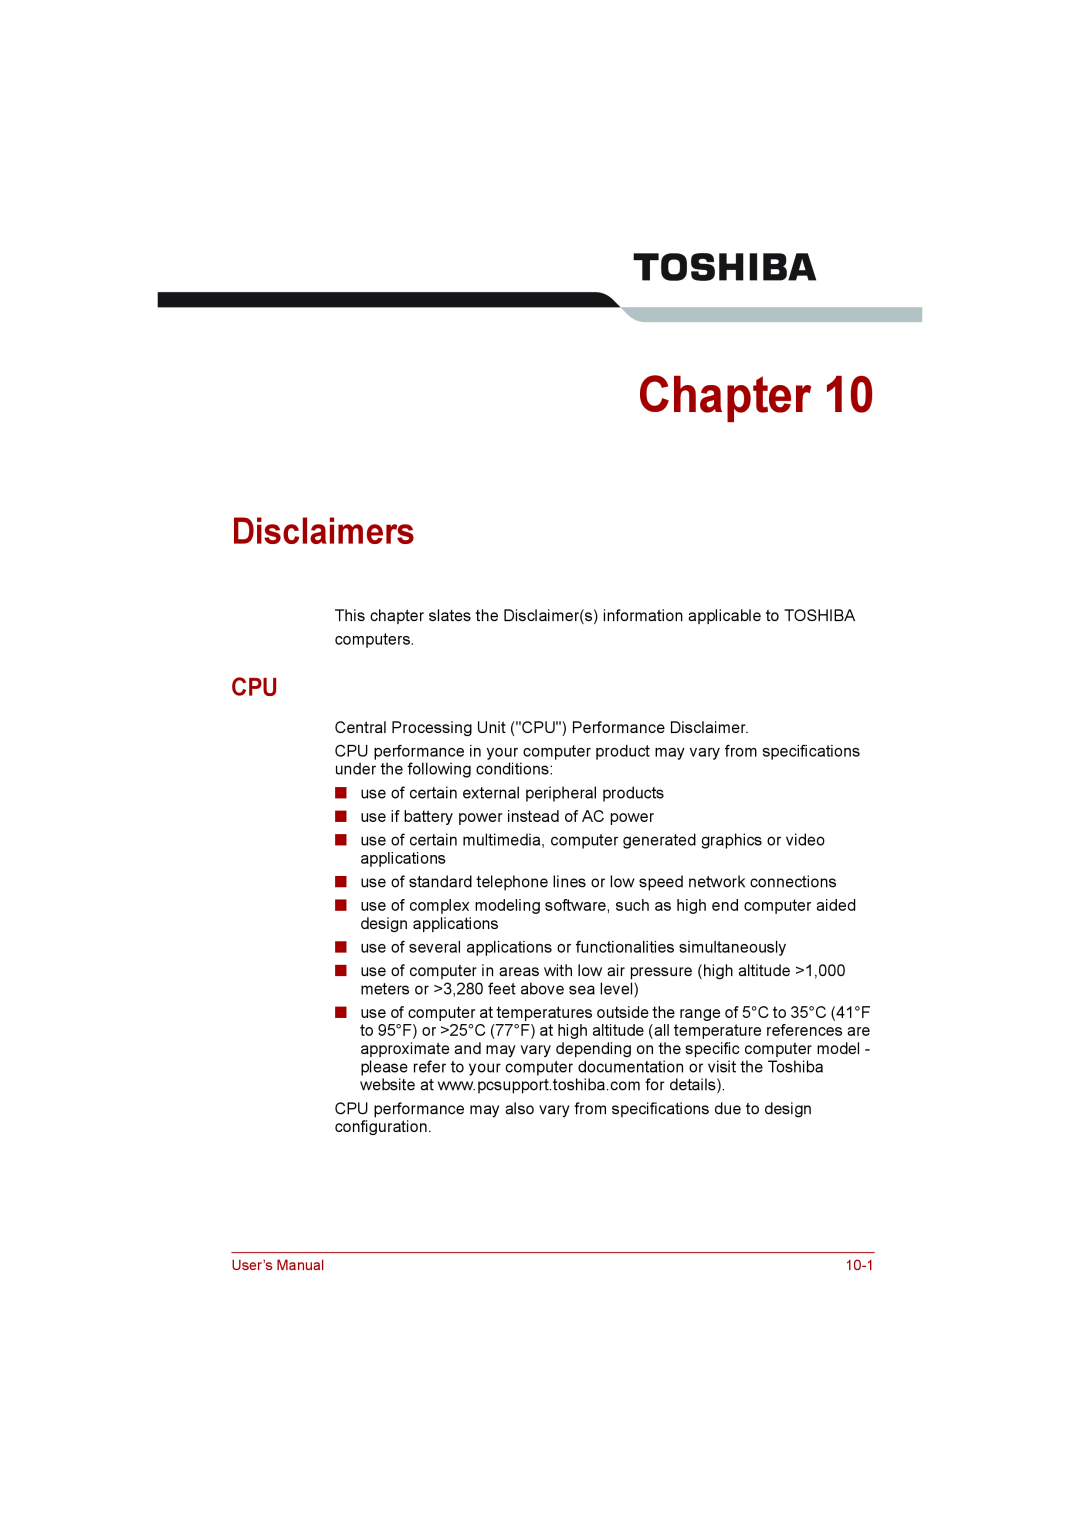 Toshiba toshiba satellite l550/ satellite pro l550/ satellite l550d/ satellite pro l550d series Disclaimers, Chapter 